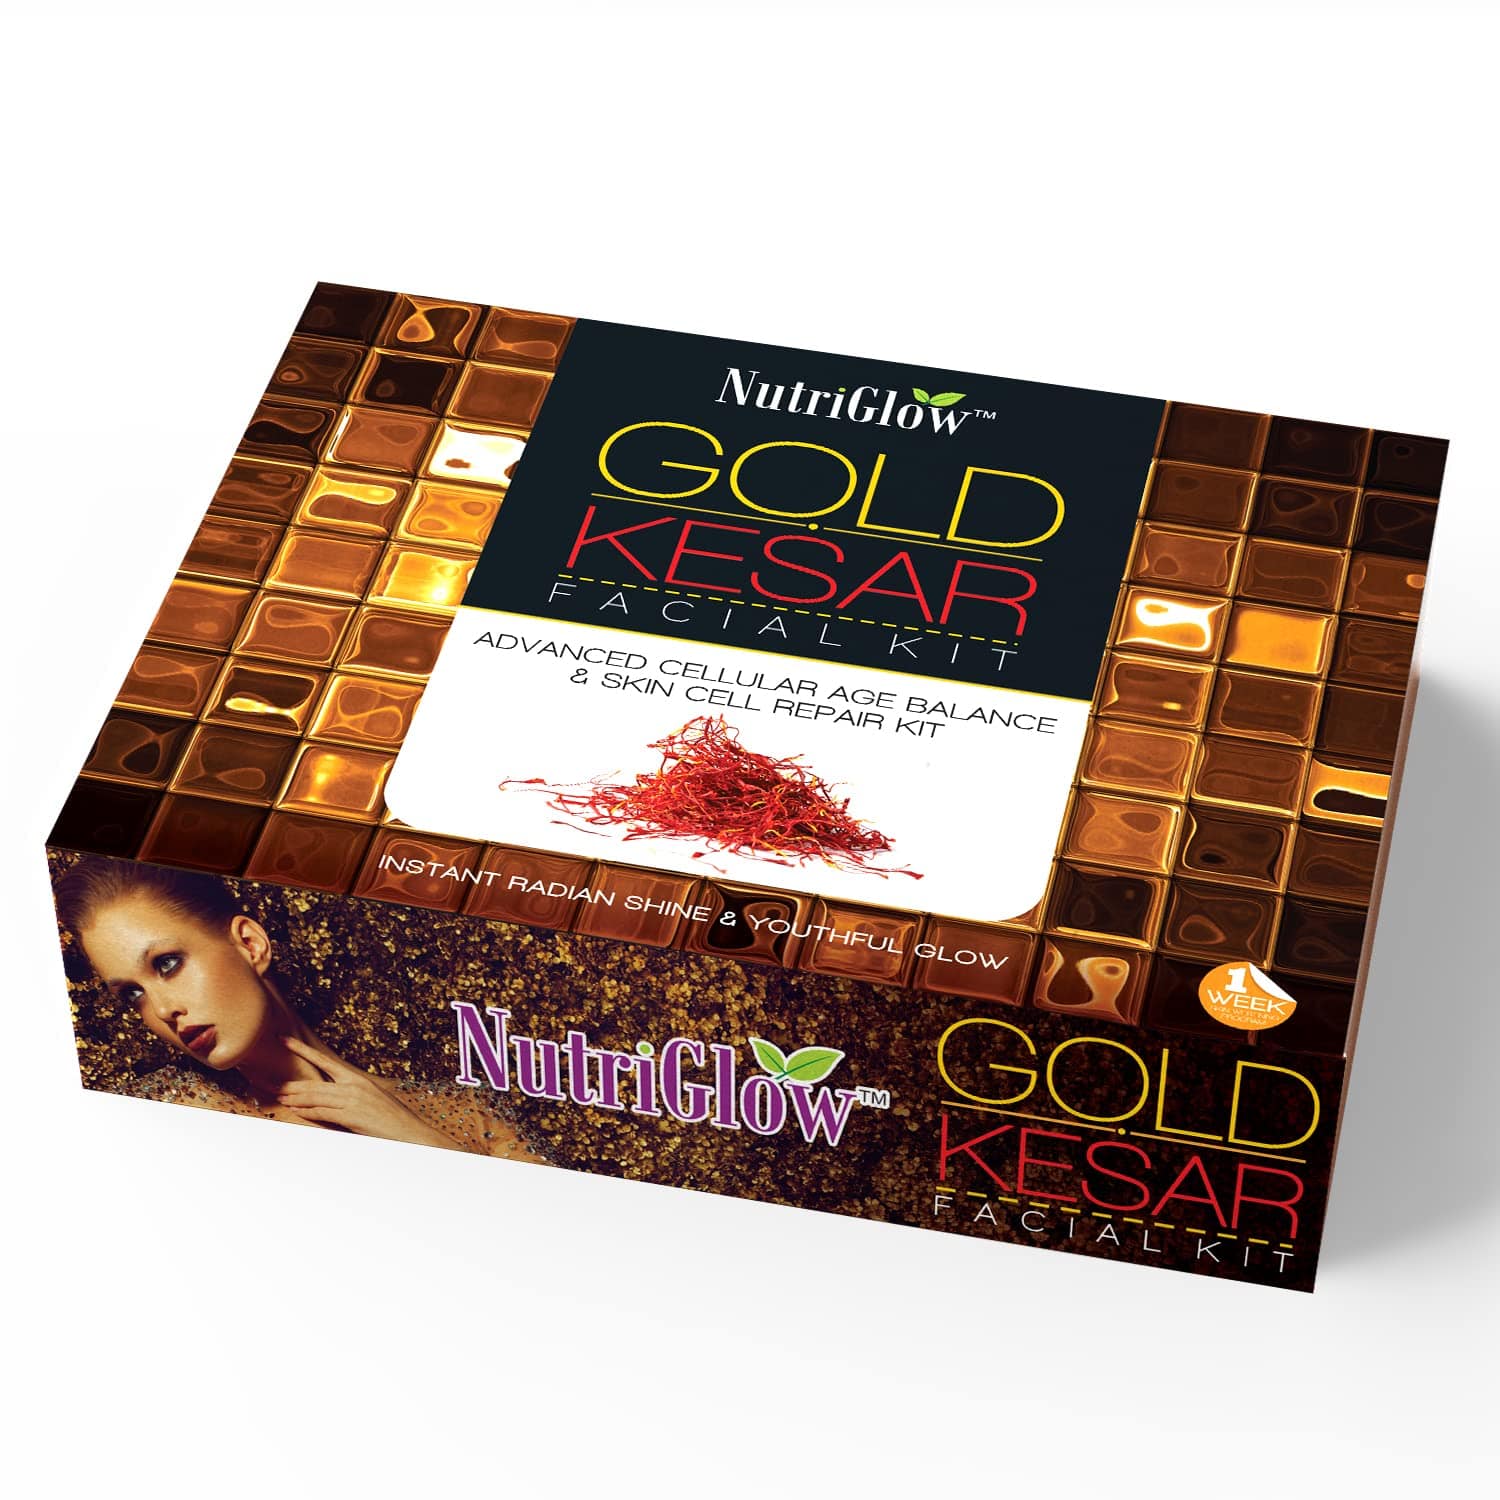 NutriGlow Gold Kesar Facial Kit for Women